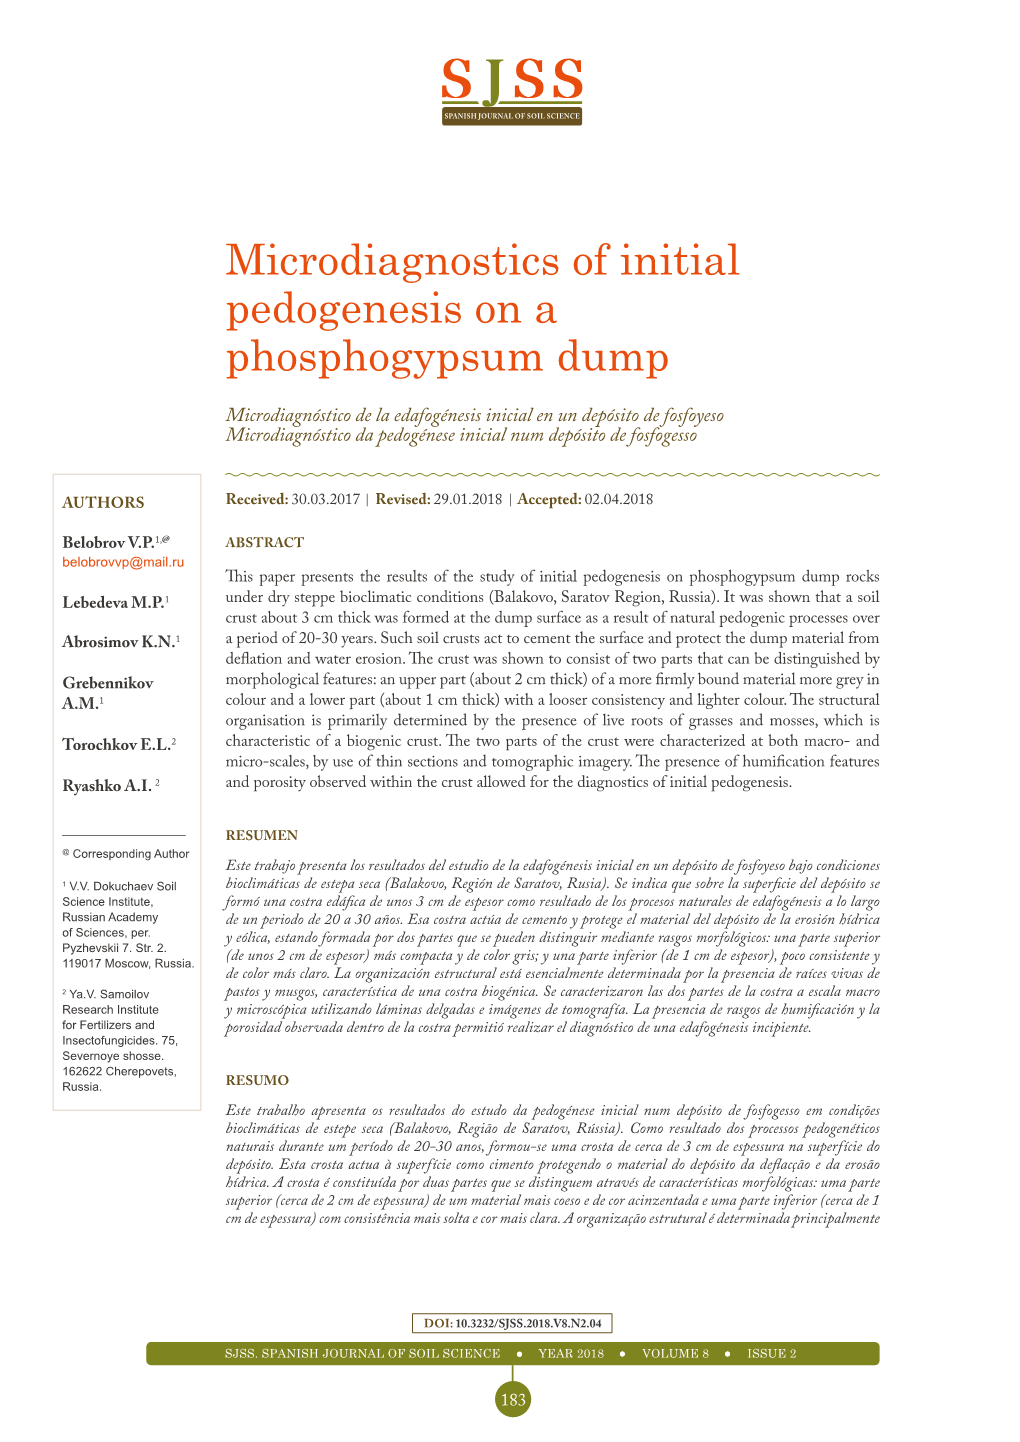 Microdiagnostics of Initial Pedogenesis on a Phosphogypsum Dump